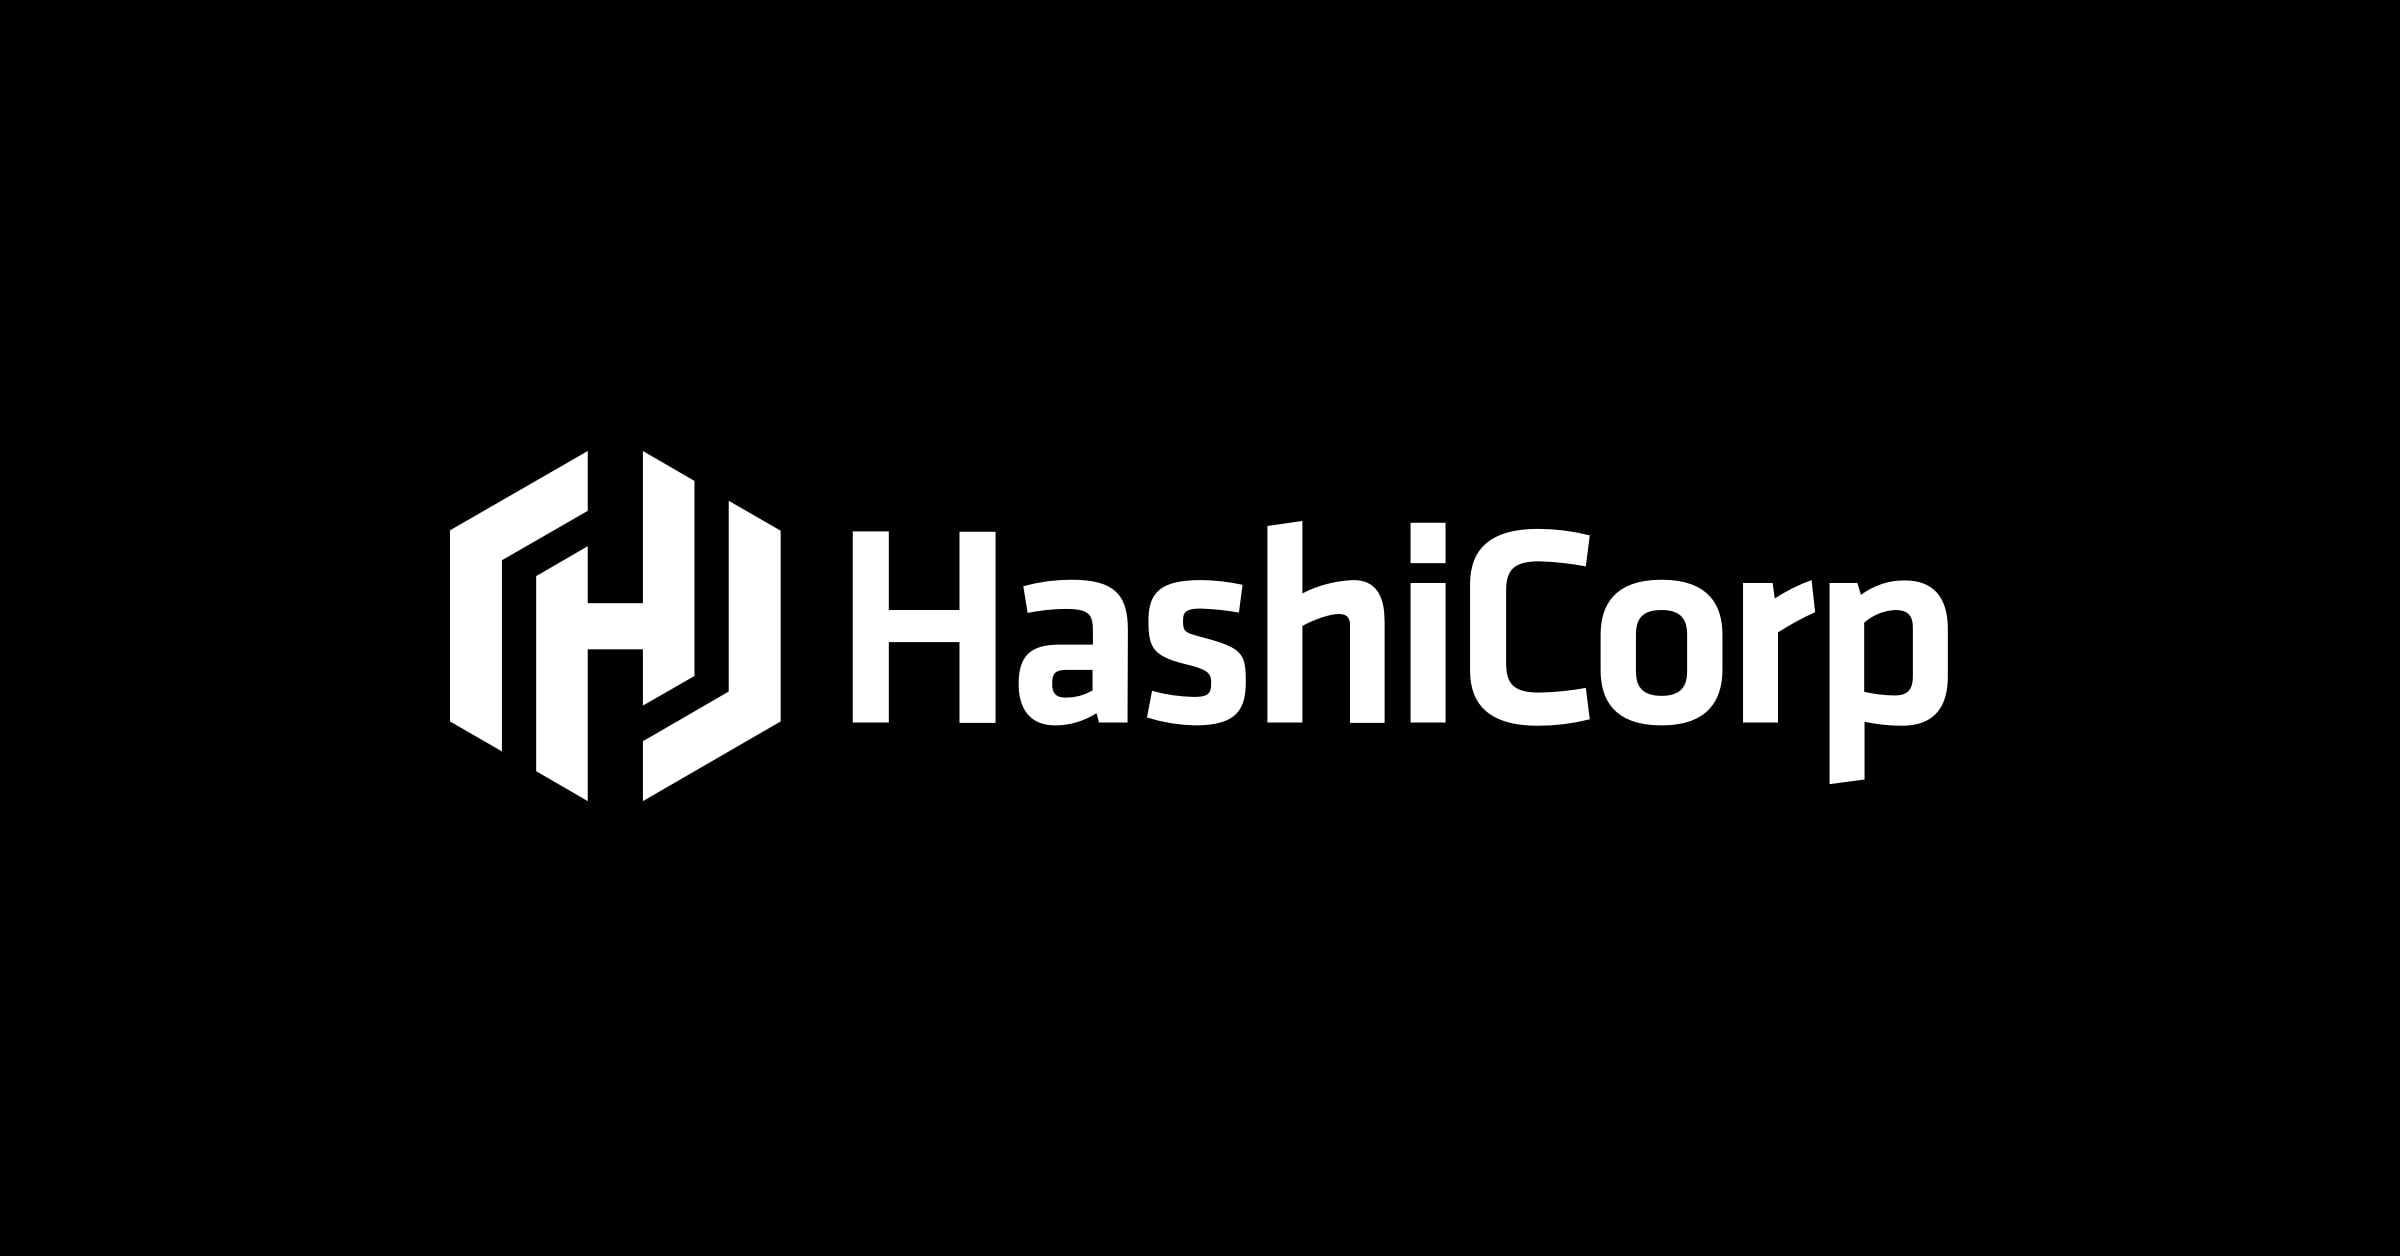 HashiCorp